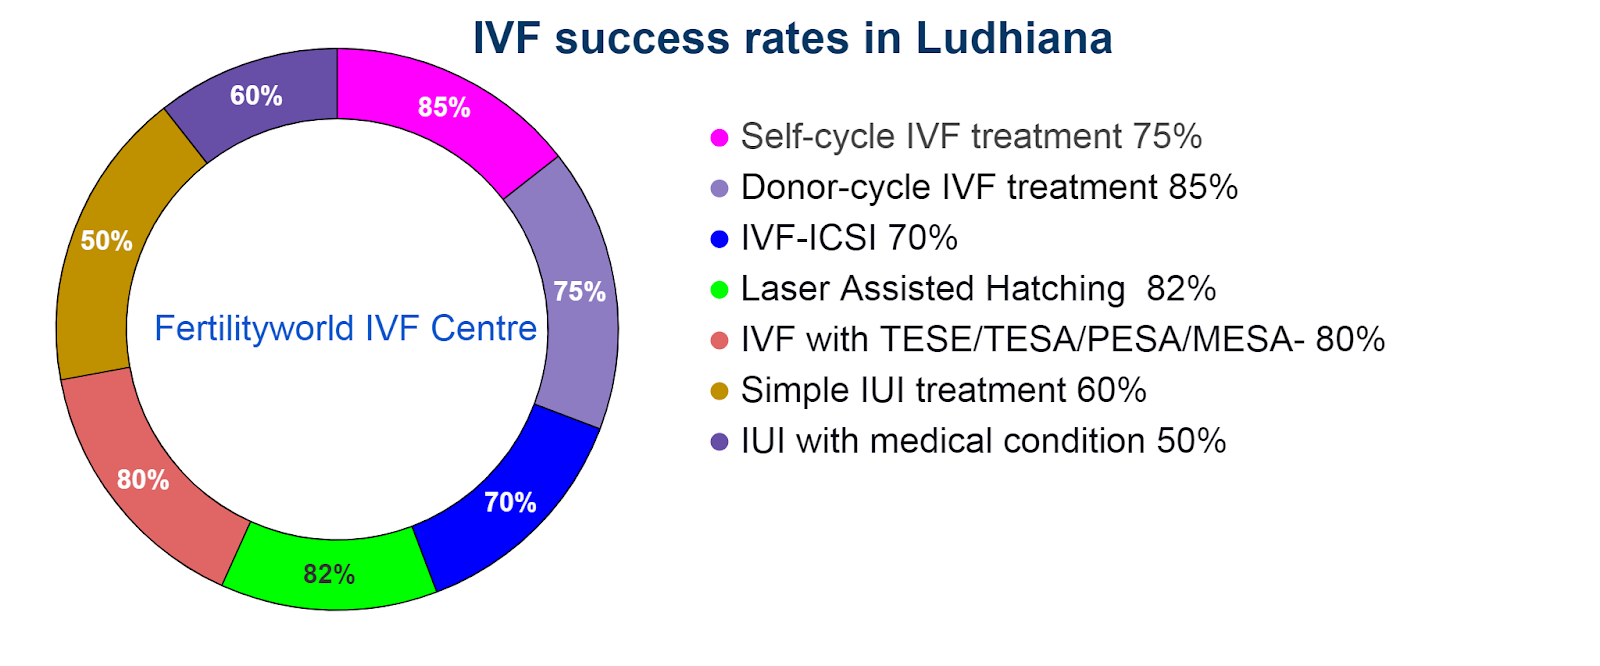 IVF success rate in Ludhiana